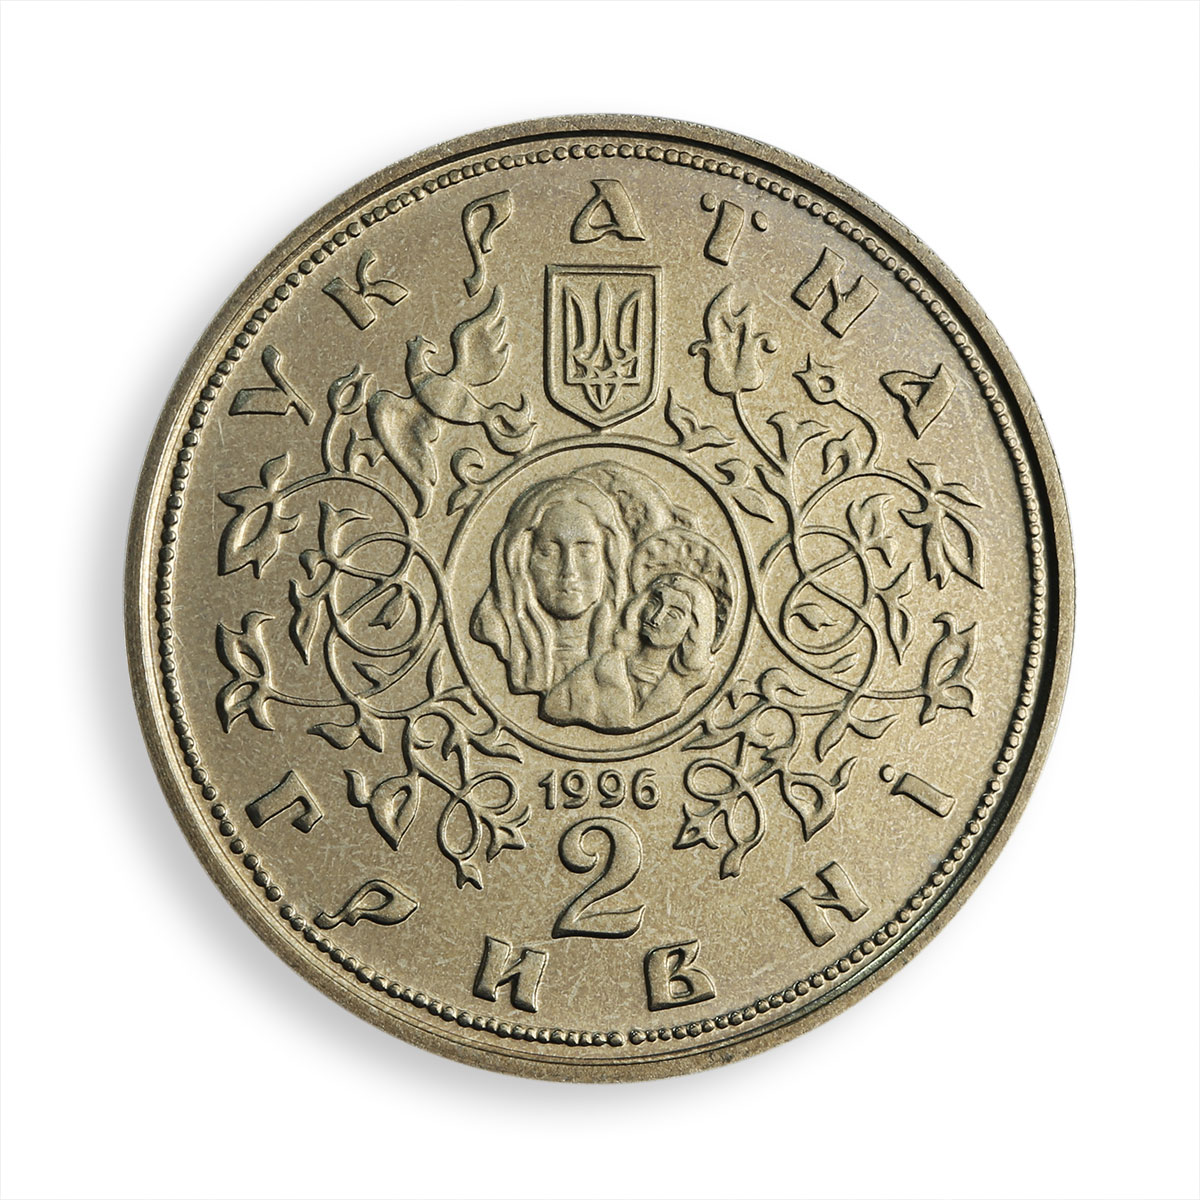 Ukraine 2 hryvnia Tithe church Spiritual treasures orthodoxy Nickel silver 1996